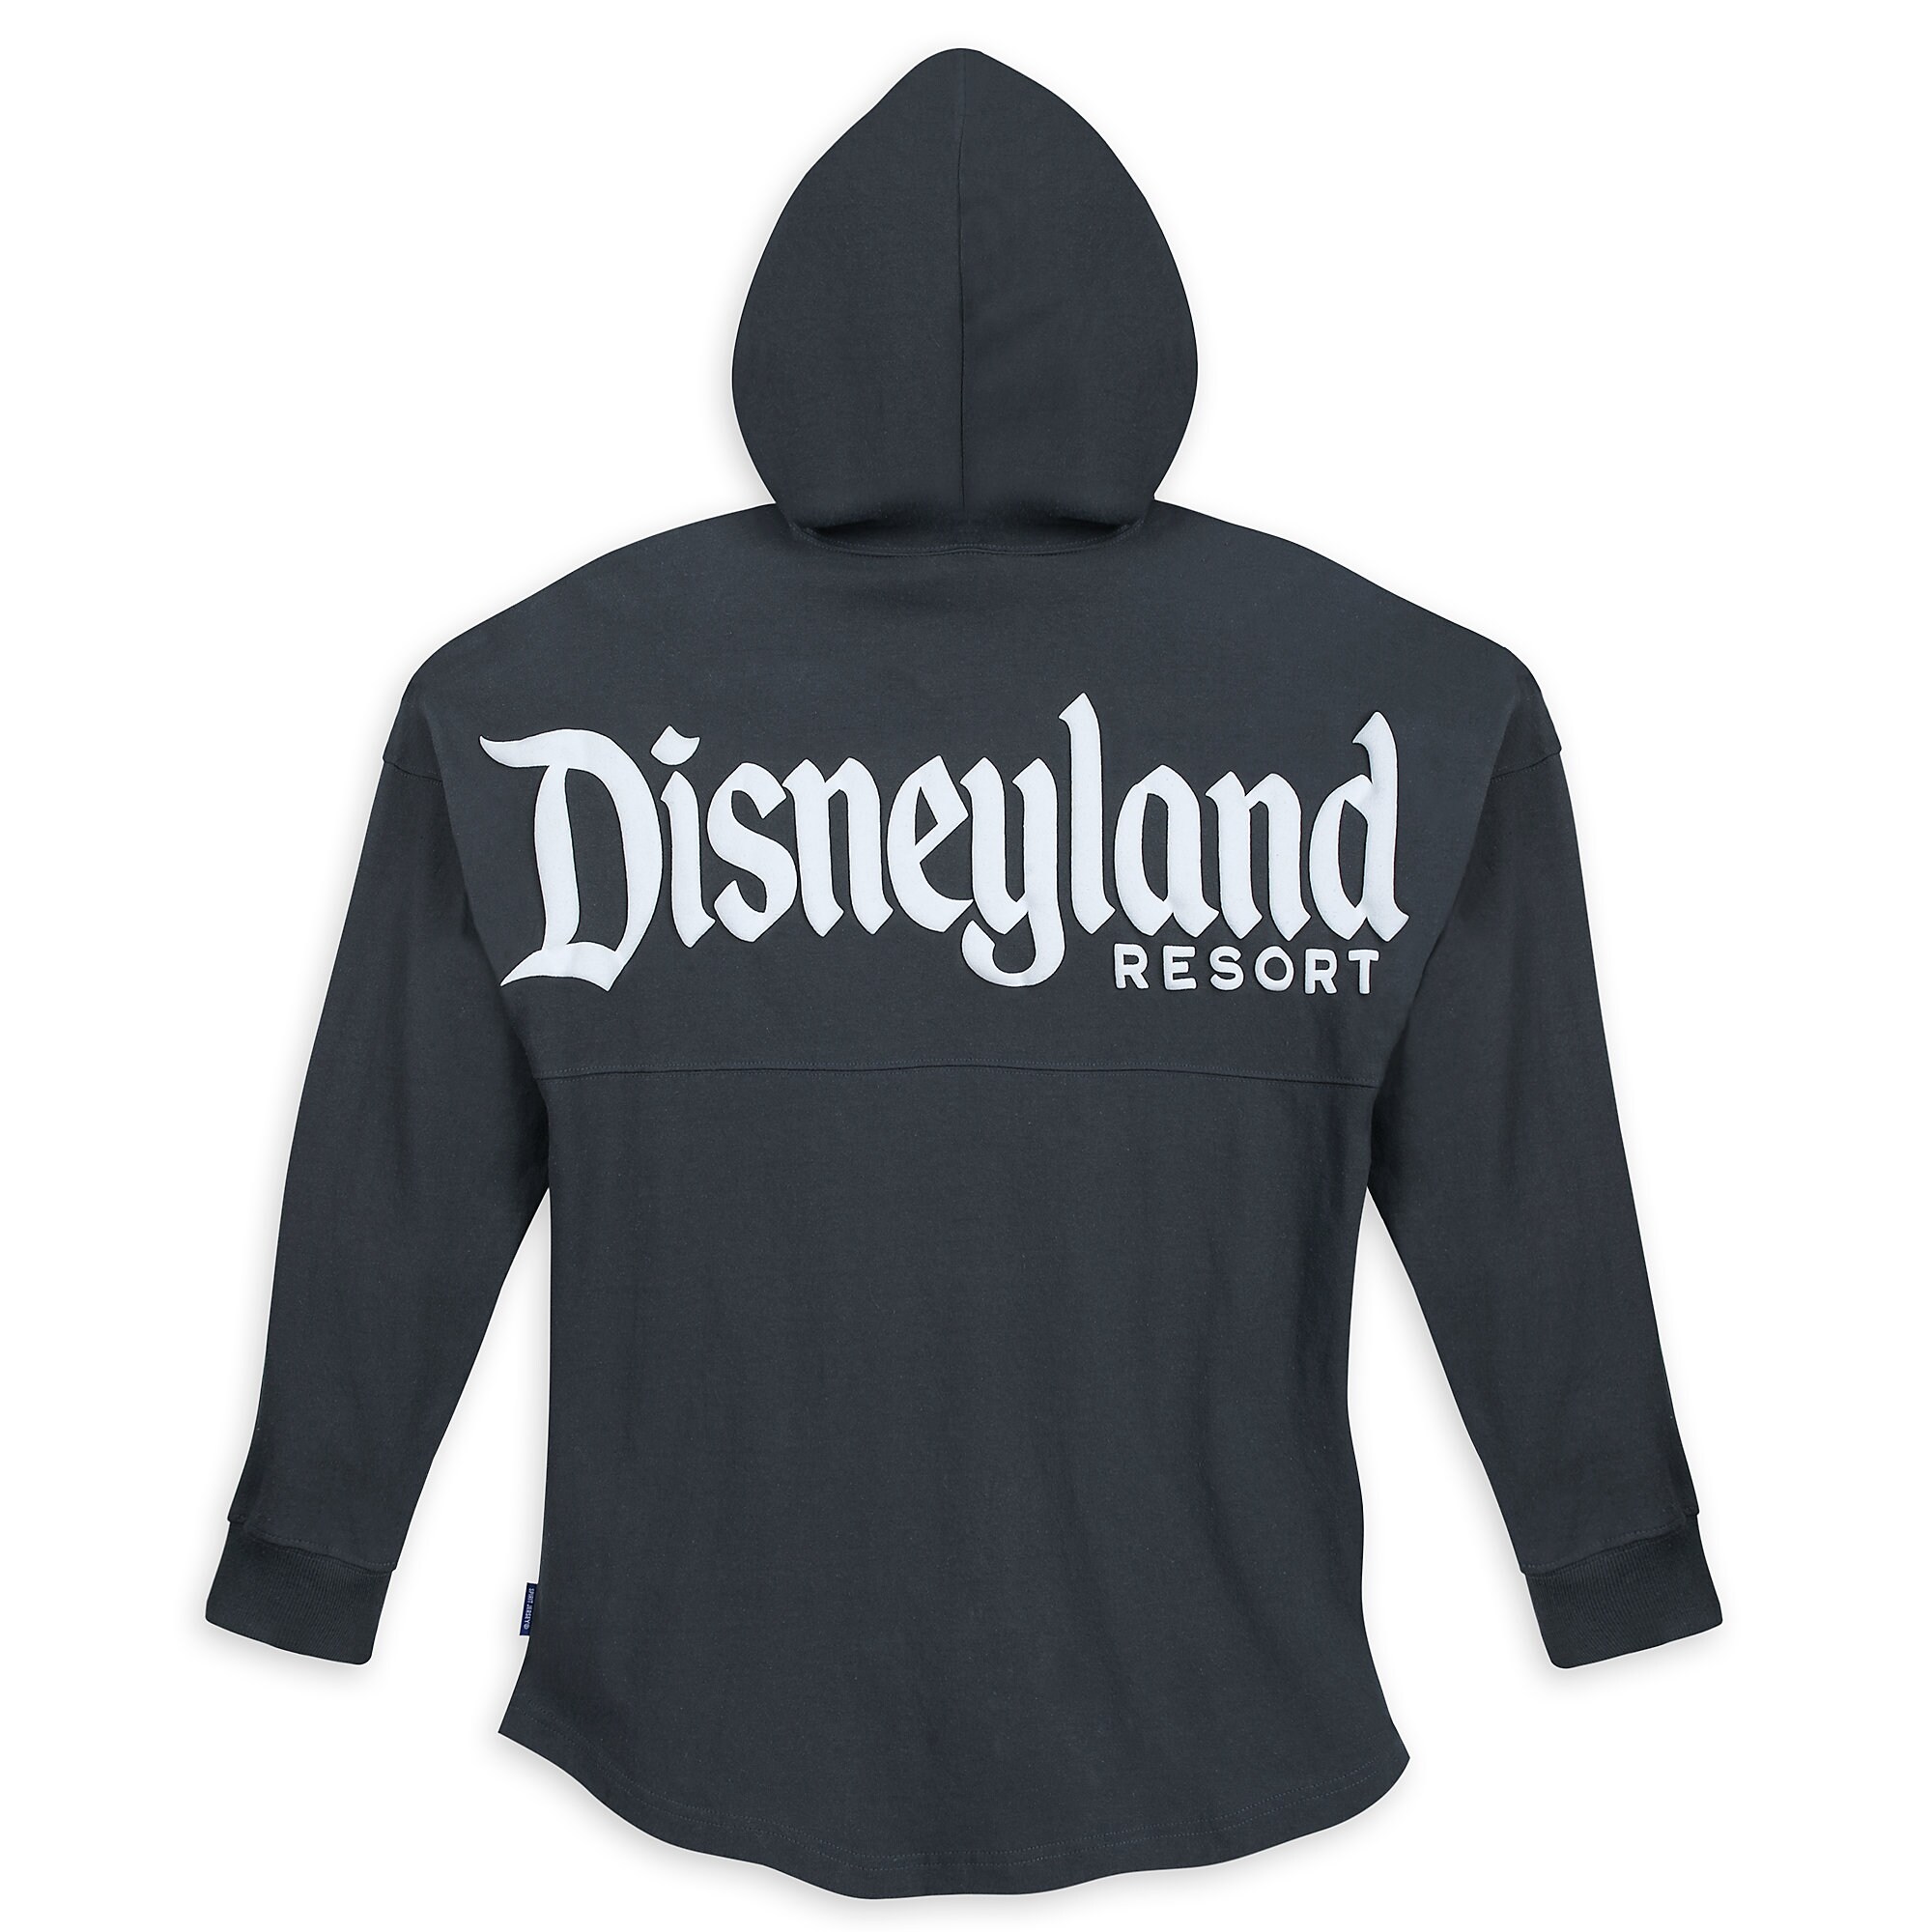 Disneyland Spirit Jersey Hoodie for Adults